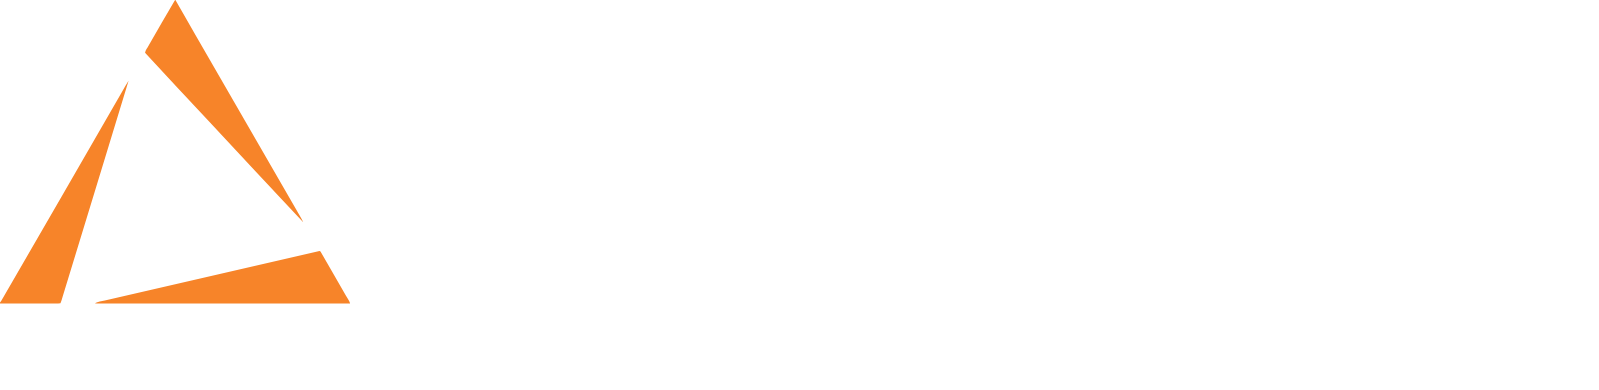 Capstone Infrastructure logo large for dark backgrounds (transparent PNG)